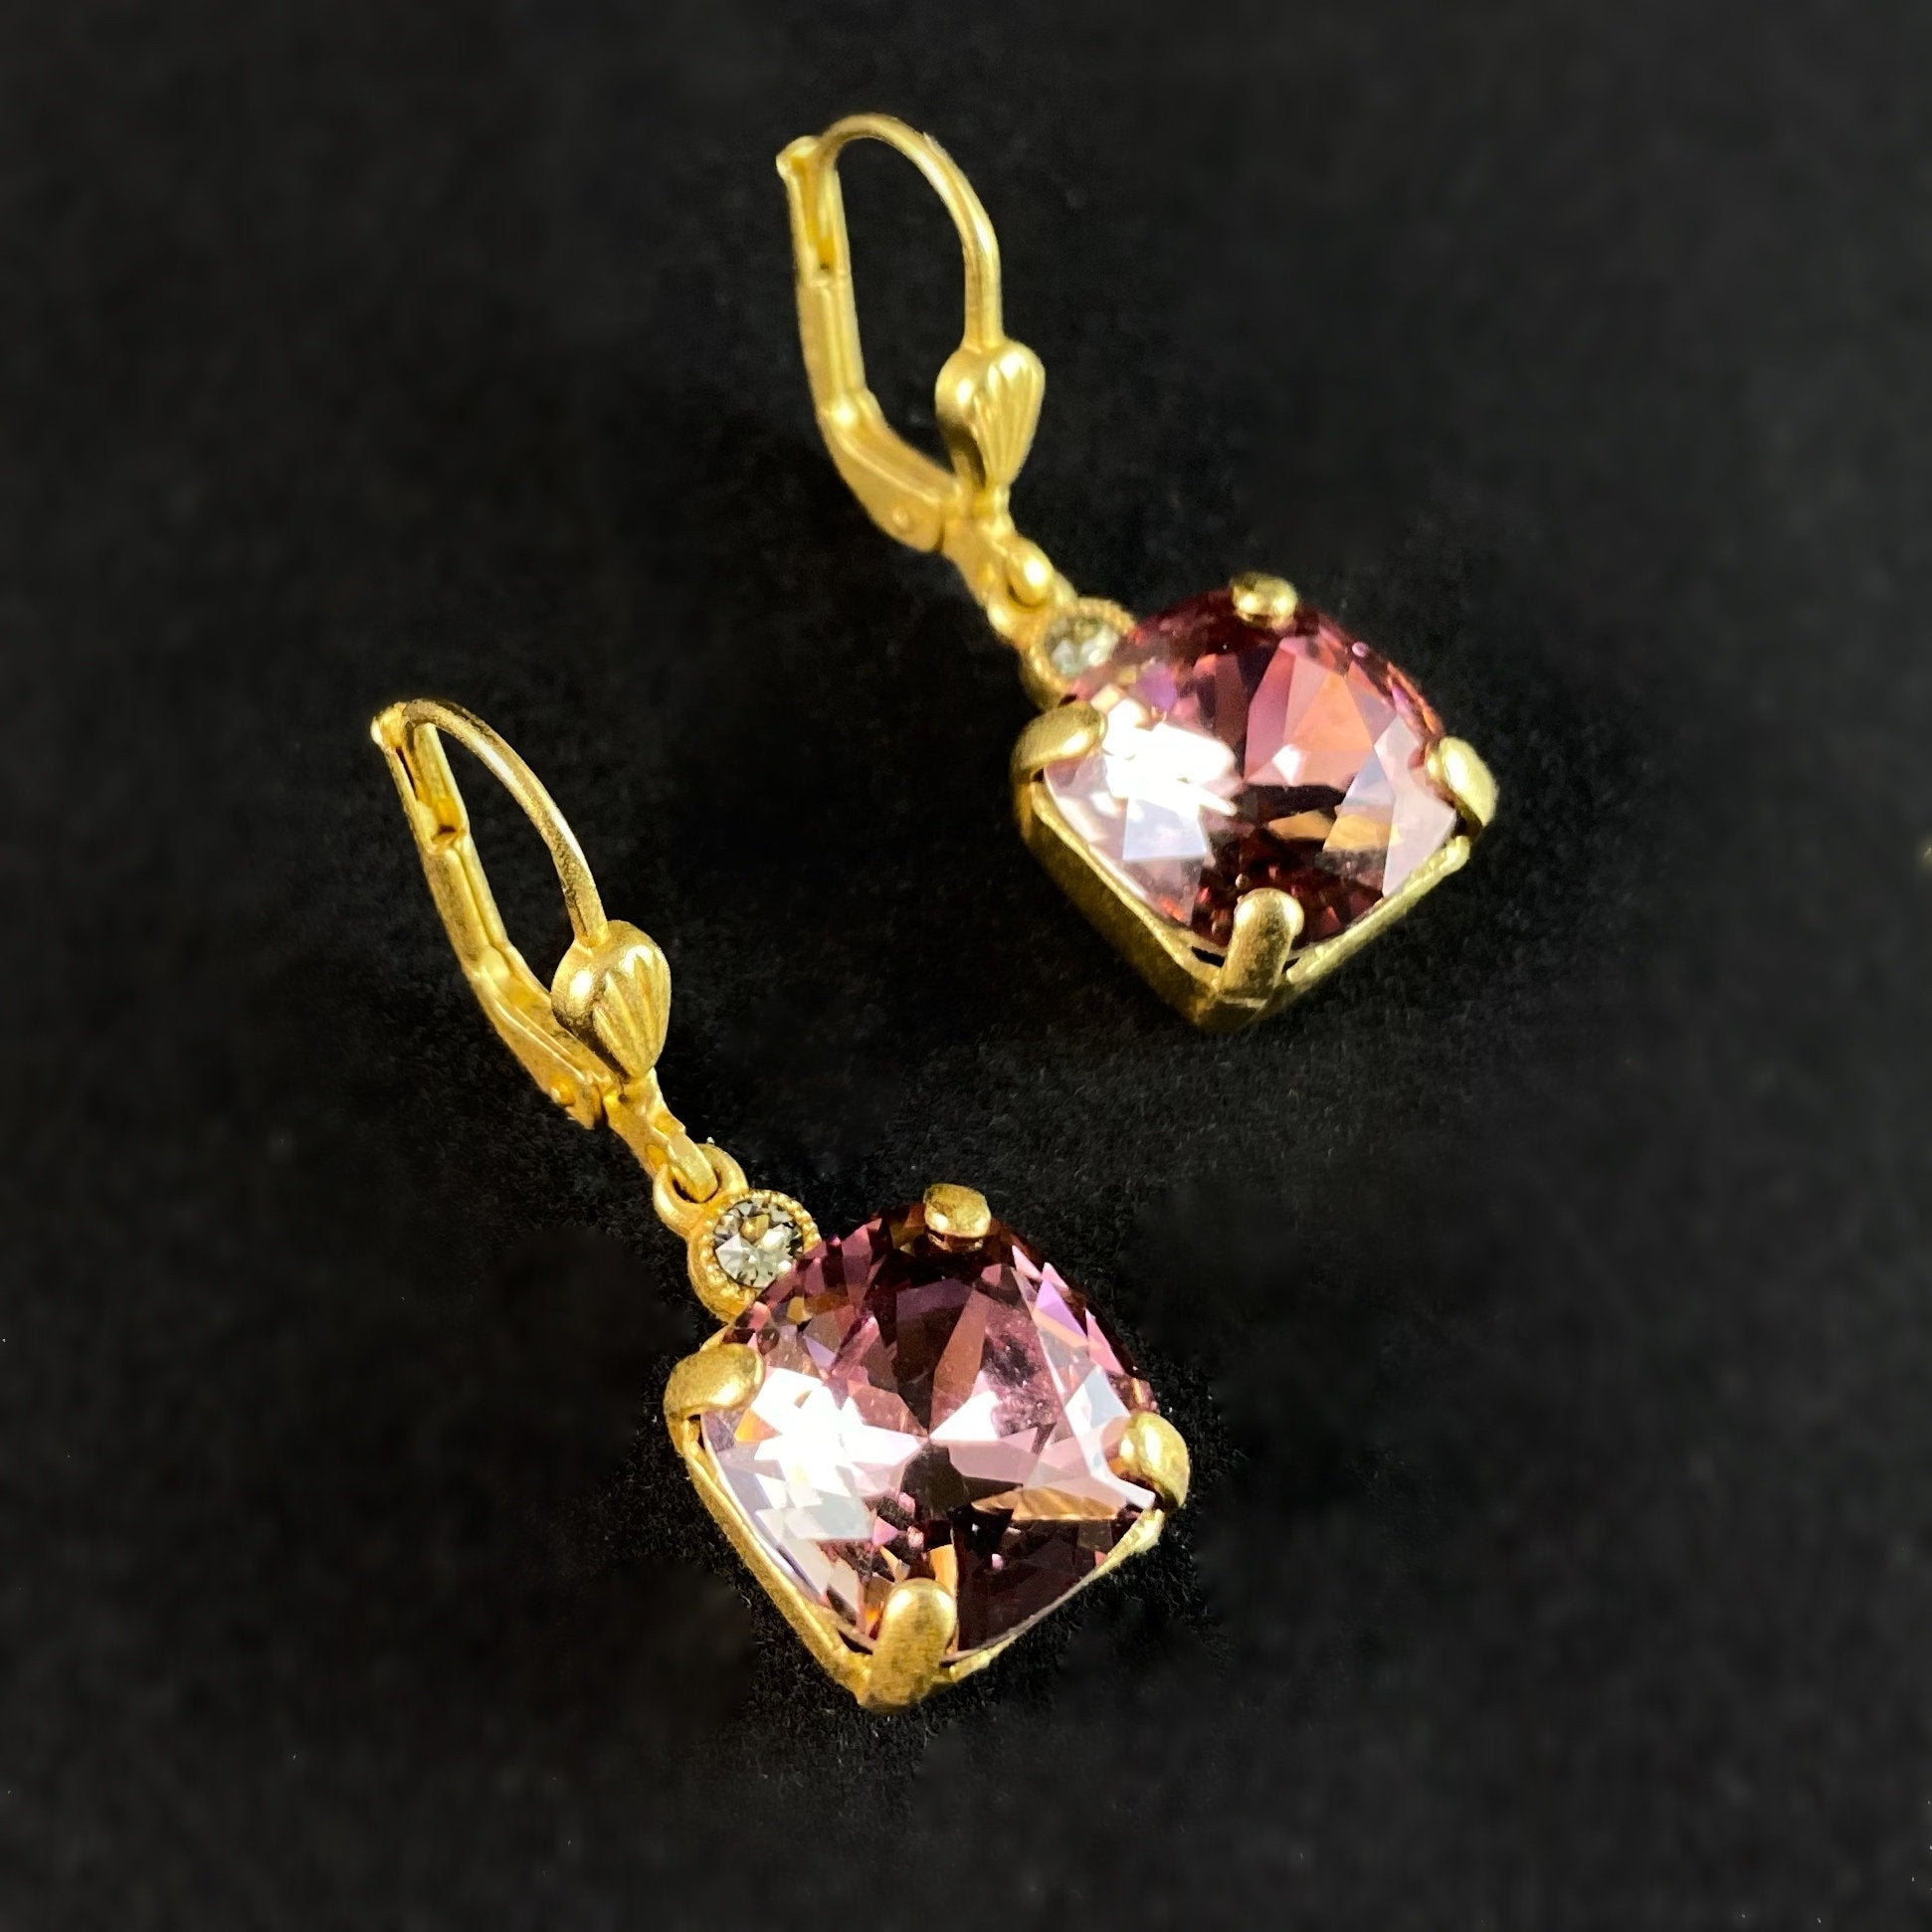 Pink Square Cut Swarovski Crystal Drop Earrings - La Vie Parisienne by Catherine Popesco